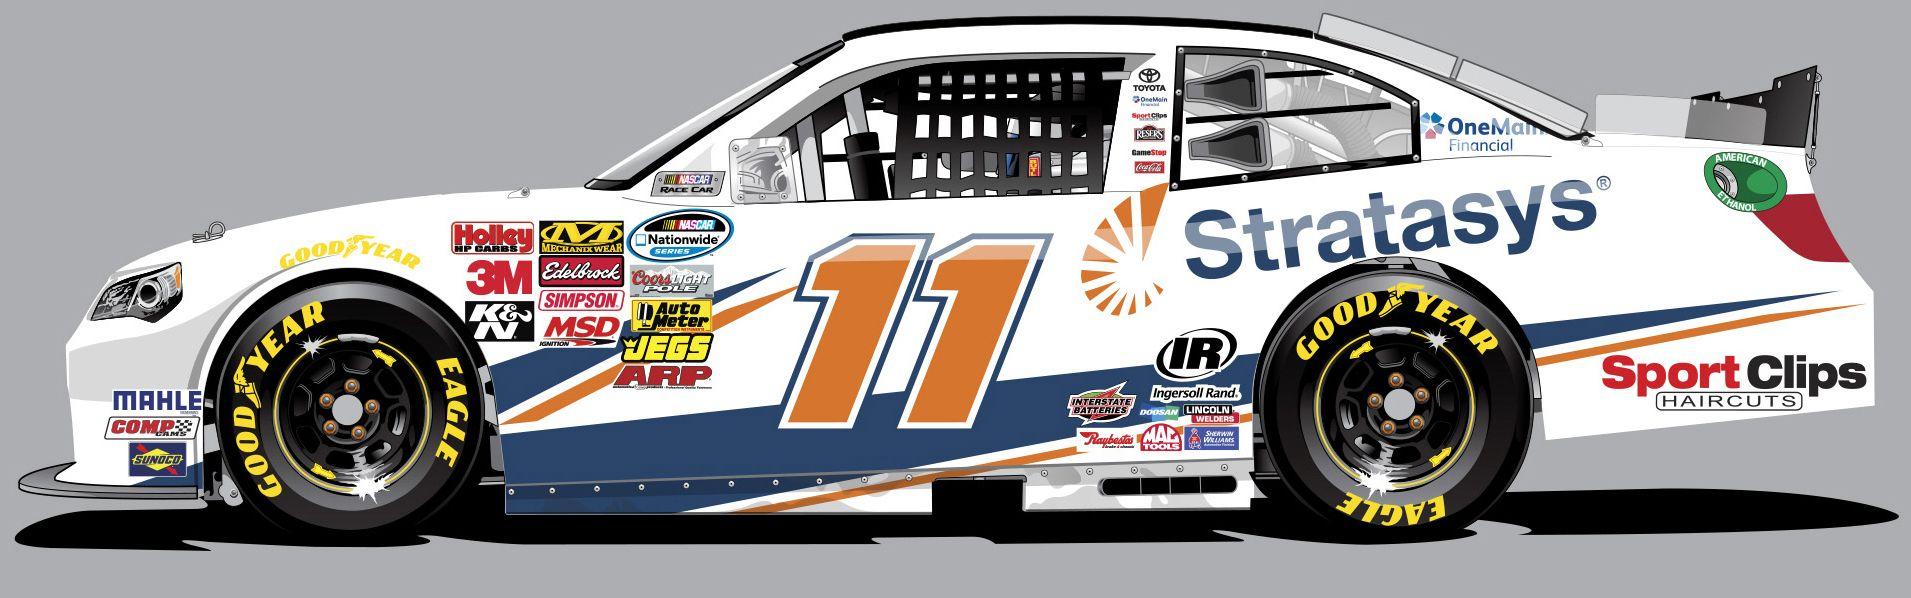 NASCAR Nationwide Series Logo - Stratasys Sponsors NASCAR Nationwide Car in the U.S. Cellular 250 at